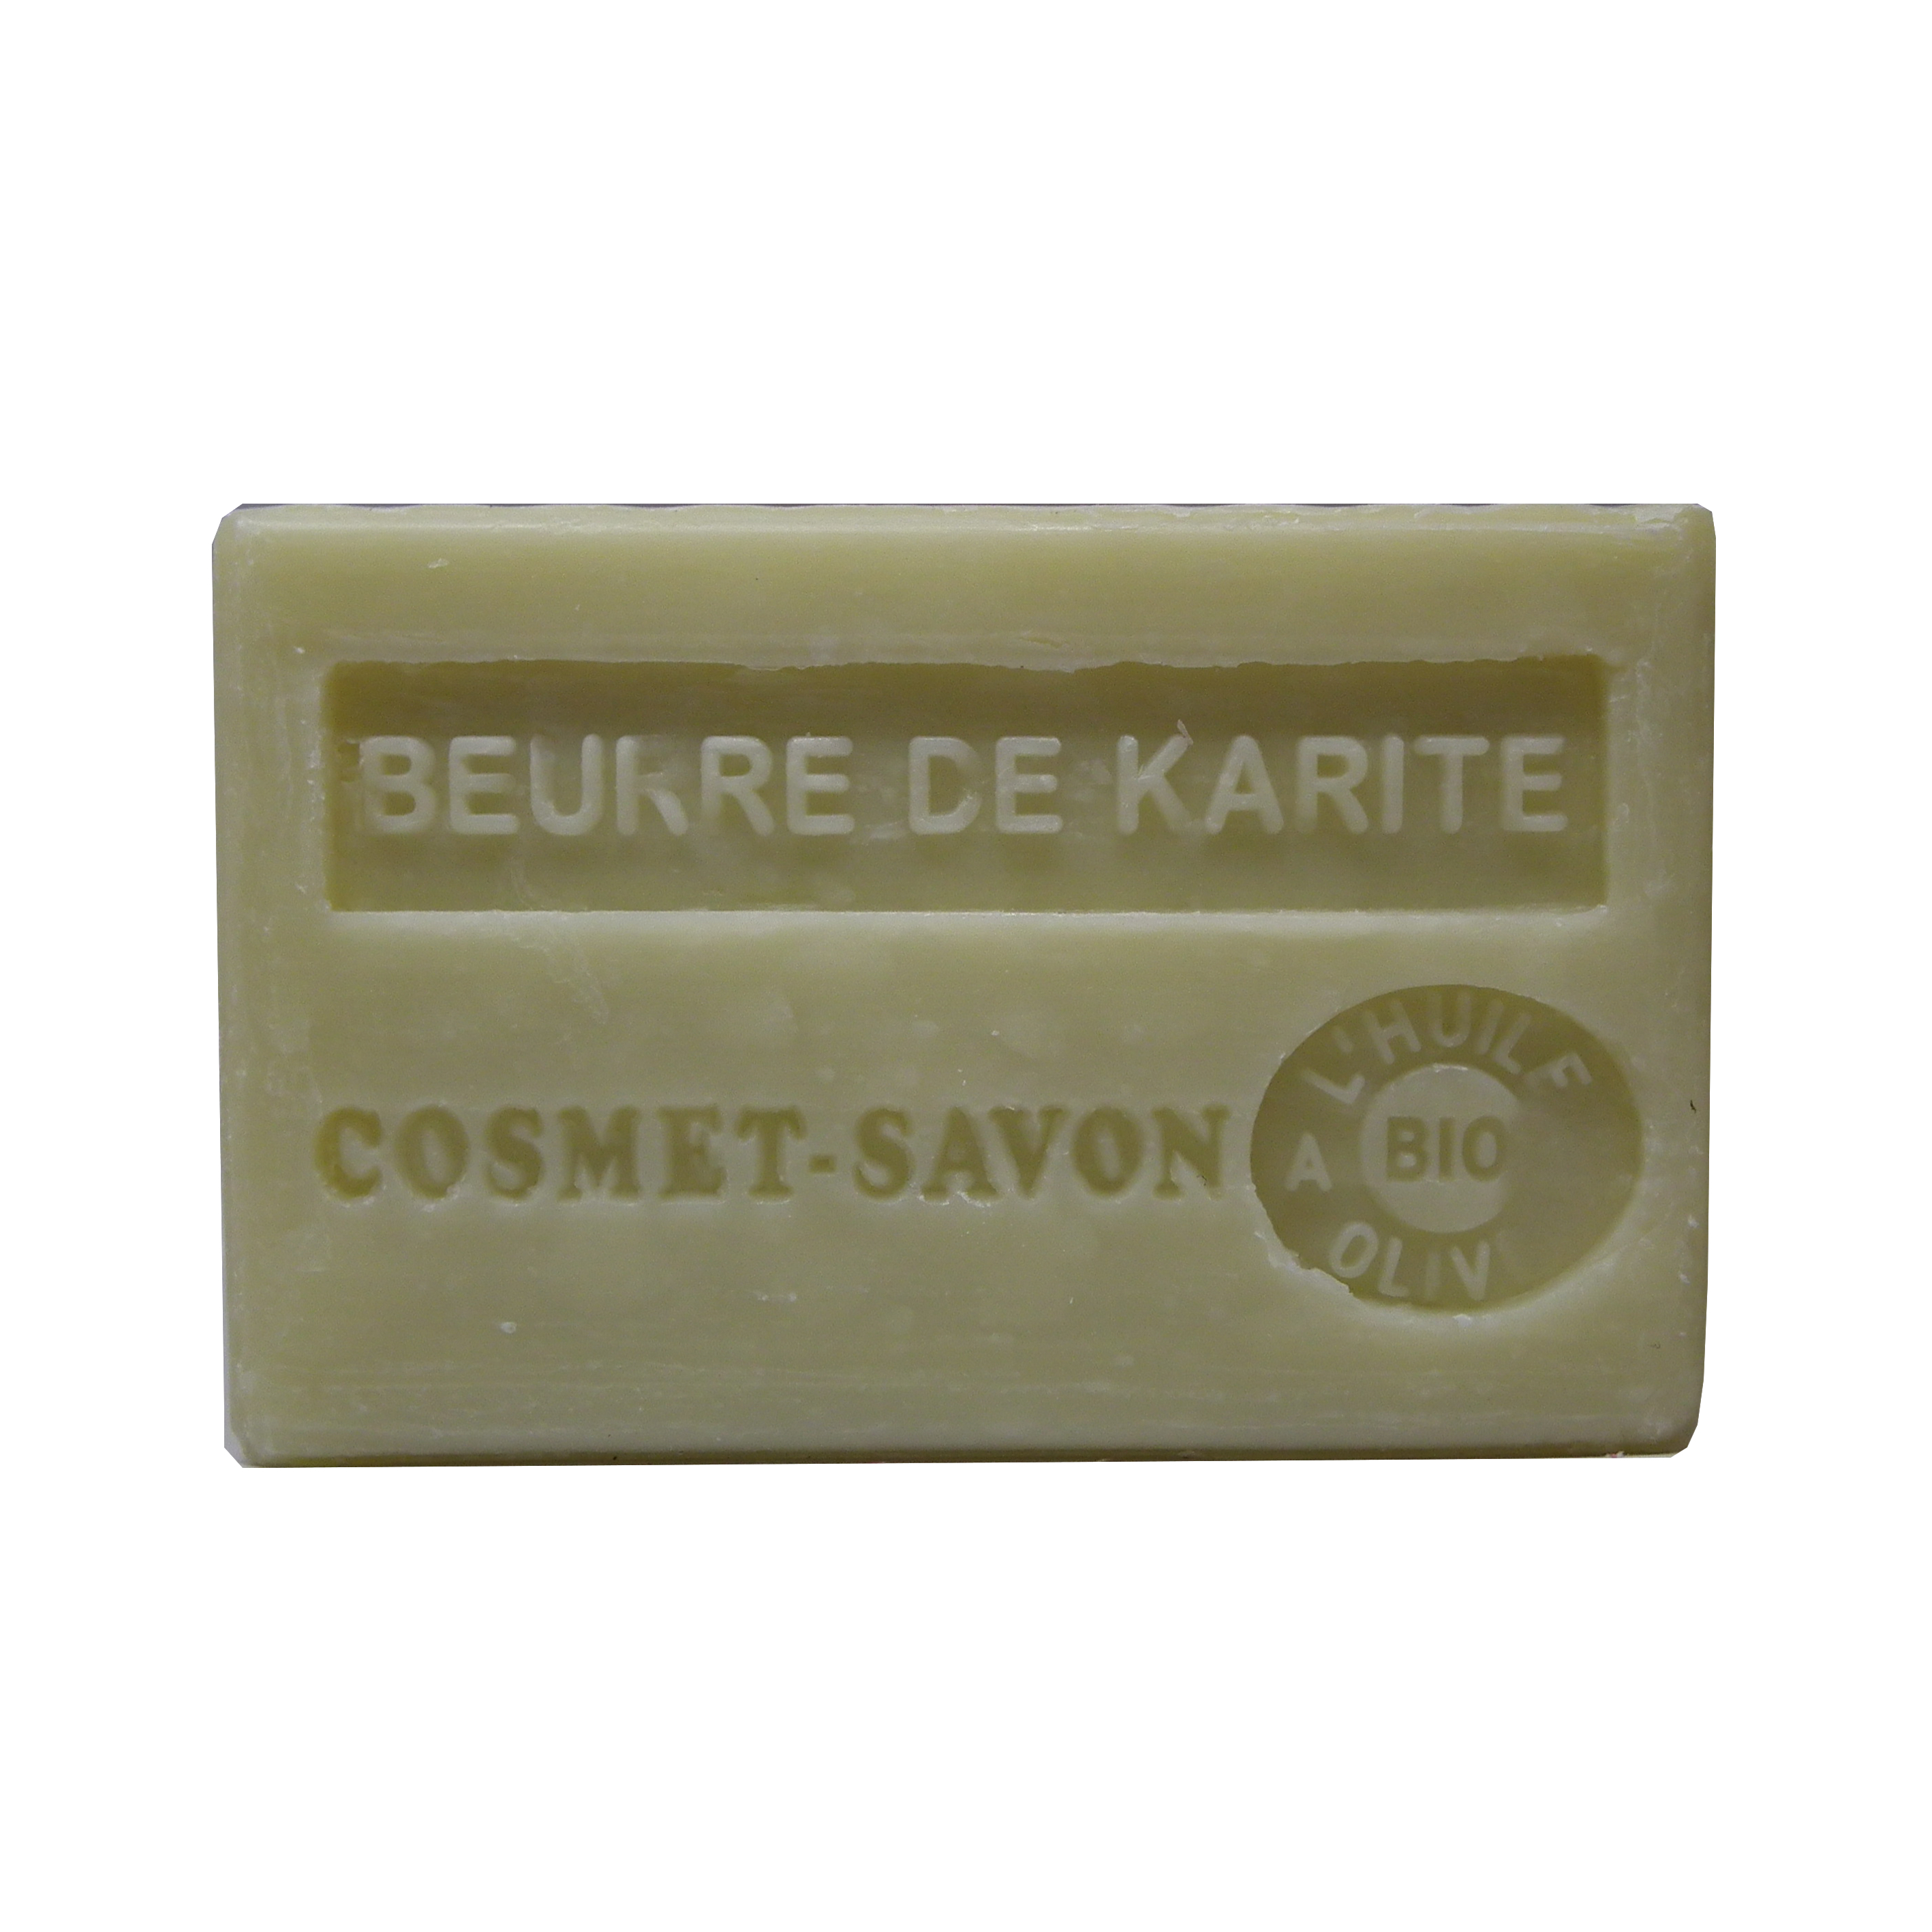 beurre-de-karite-savon-125gr-au-beurre-de-karite-bio-cosmet-savon-3665205006126-face-JPEG